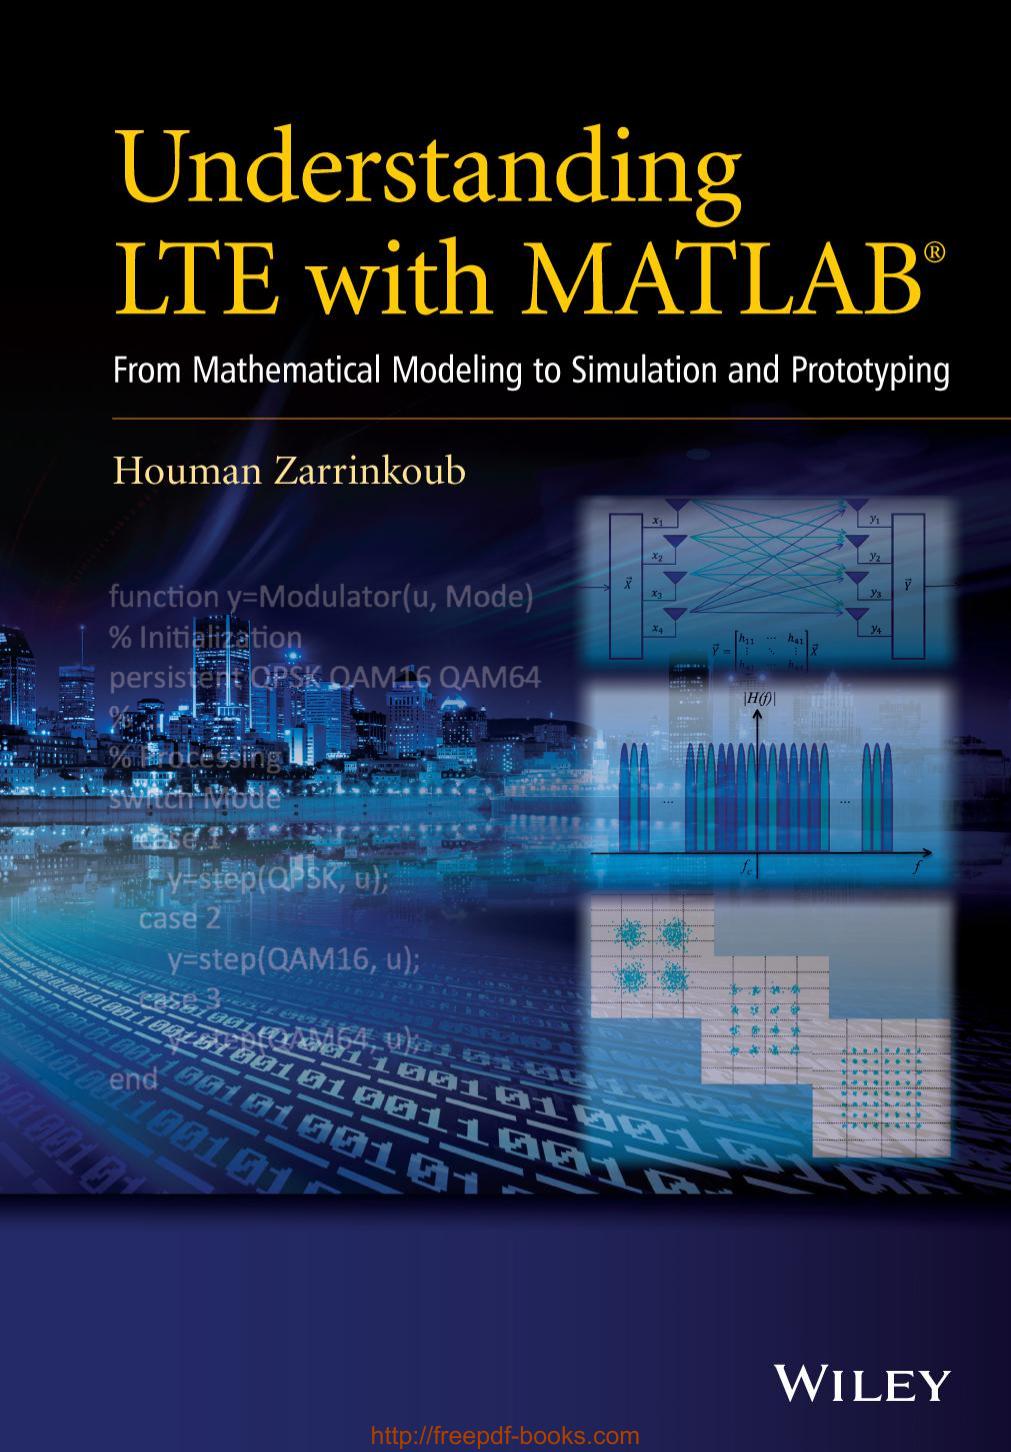 Understanding Lte With Matlab 2014.pdf